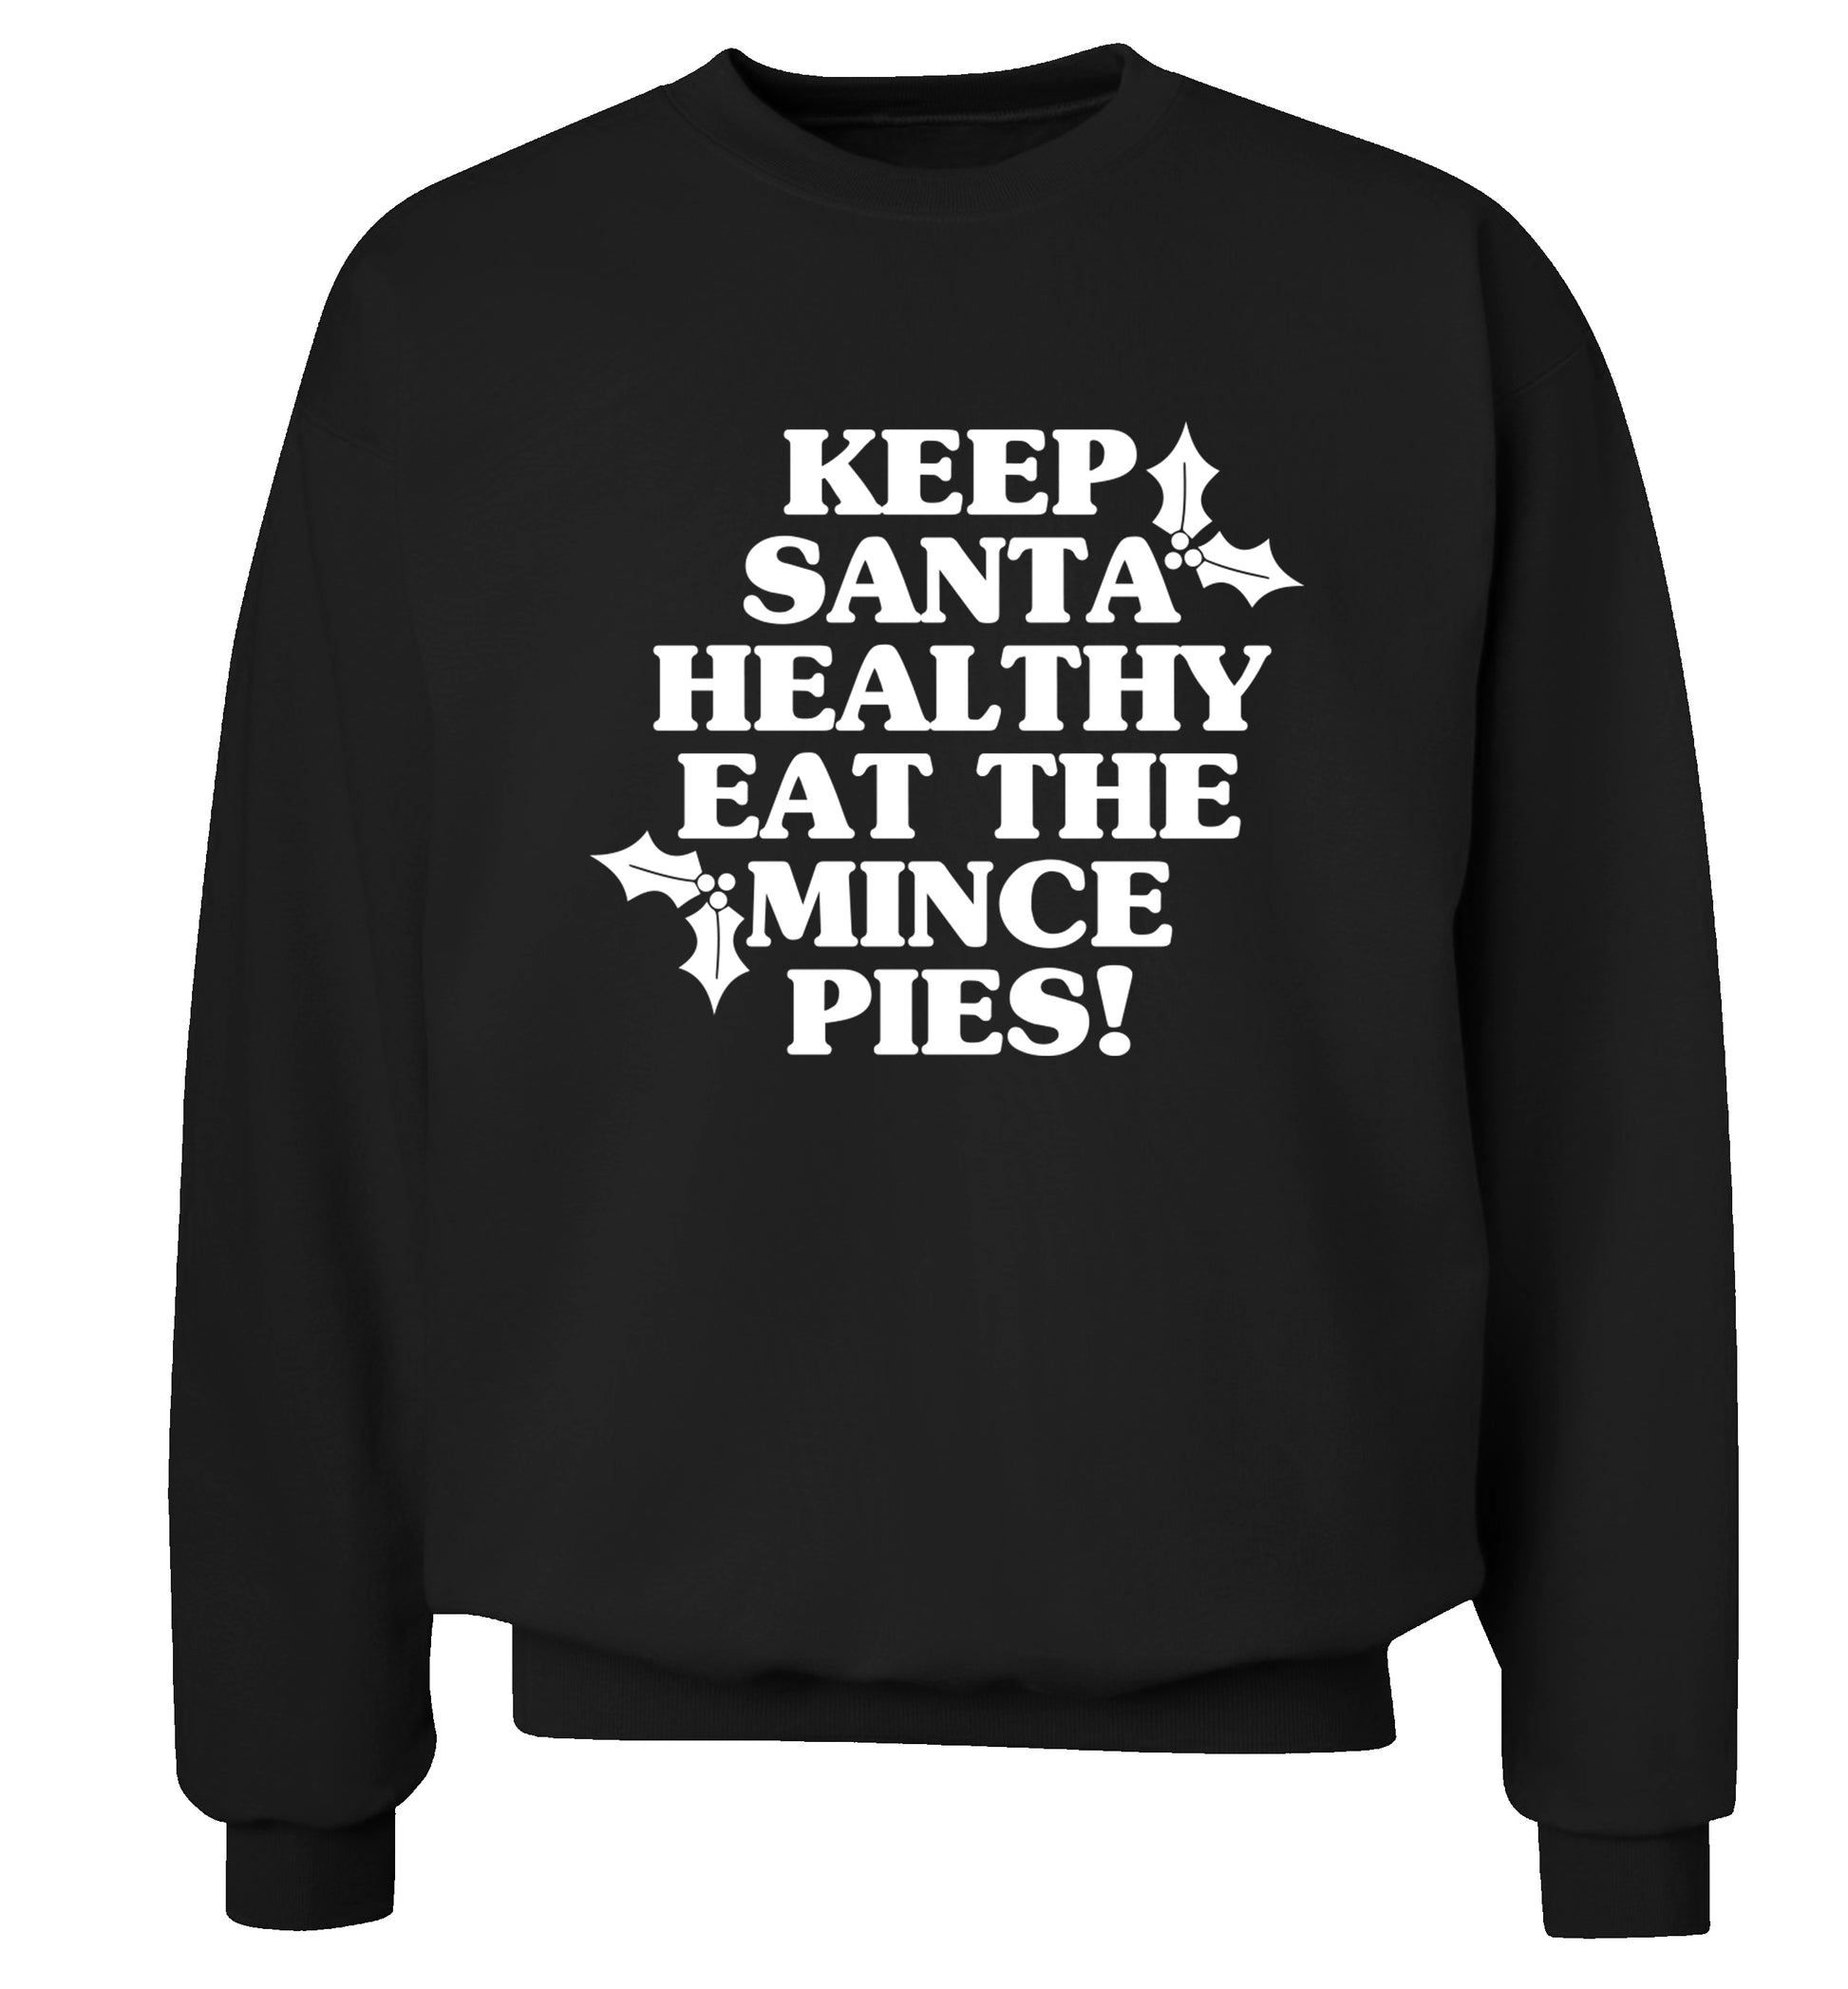 Keep santa healthy eat the mince pies Adult's unisex black Sweater 2XL